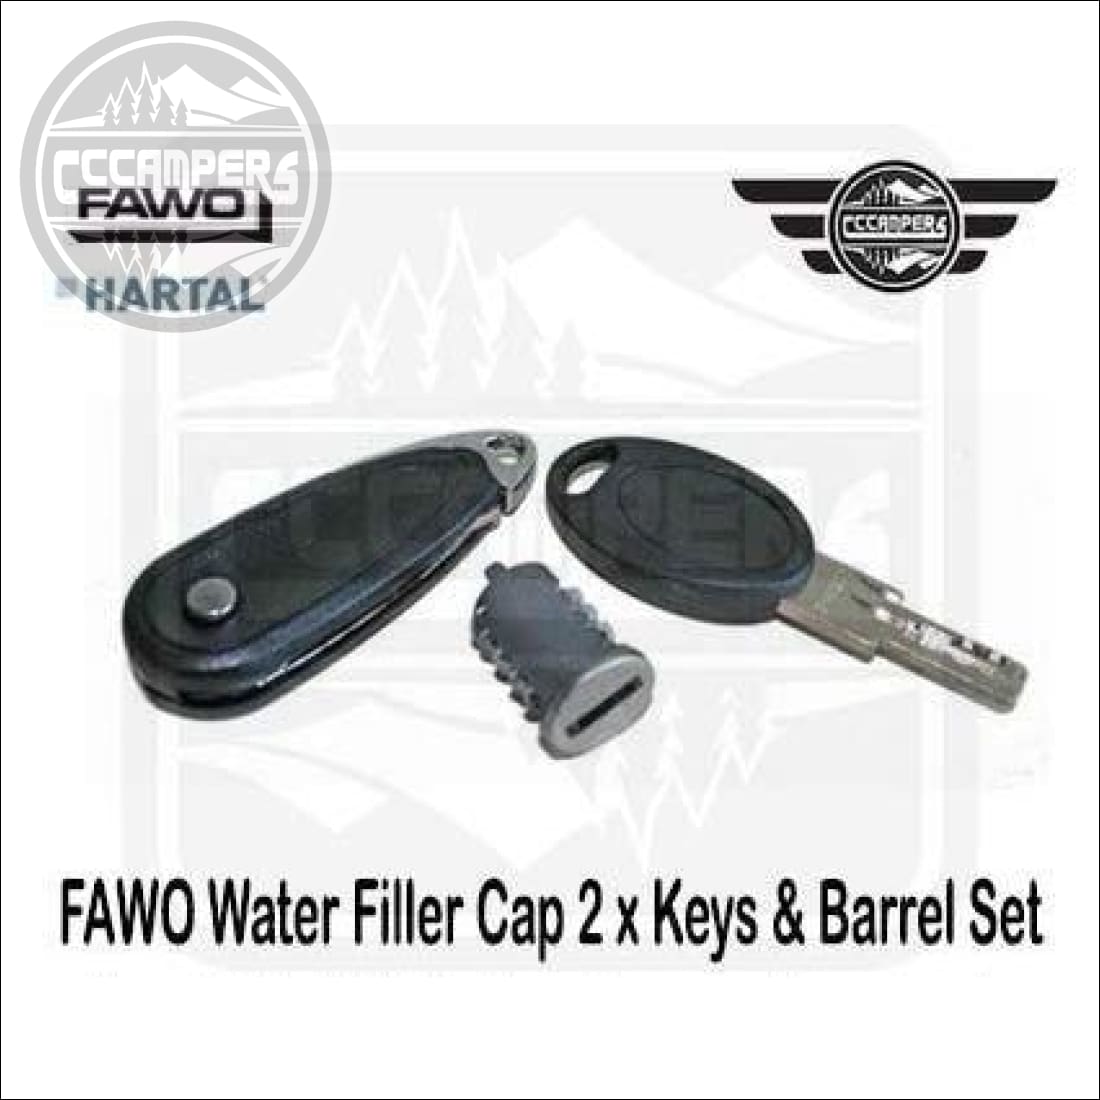 FAWO Water Filler Cap 2 x Keys & Barrel Set Also Fit Swift & Bailey Caravan Door Locks. - cccampers.myshopify.com